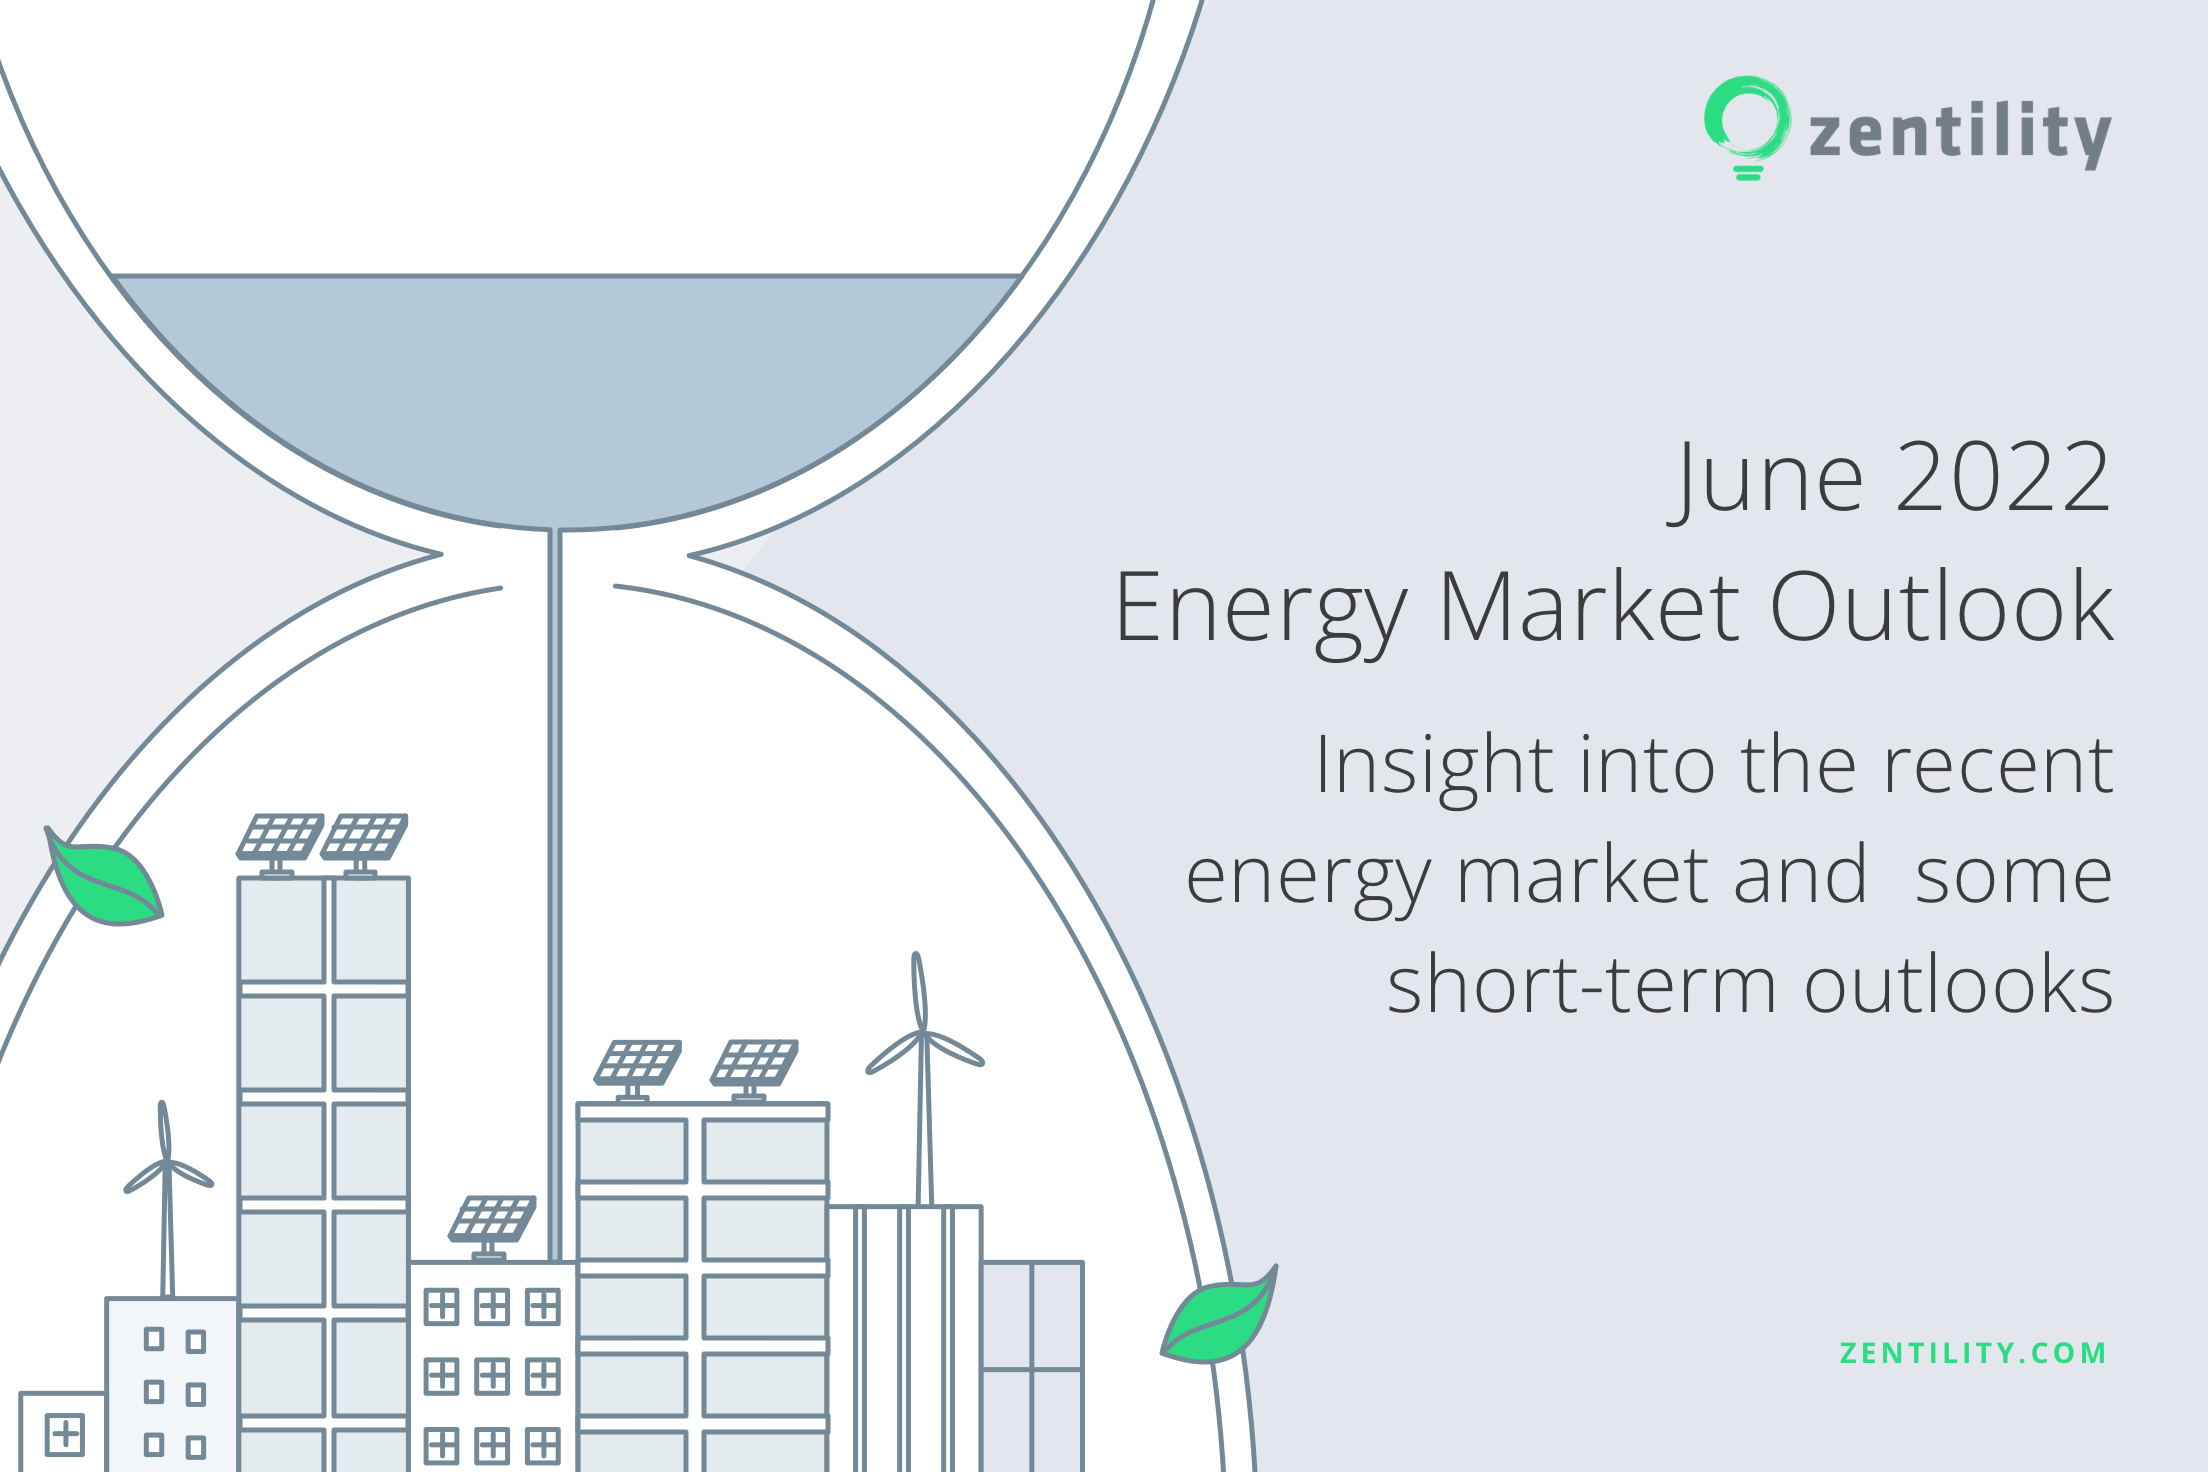 Energy Market Outlook as of June 2022